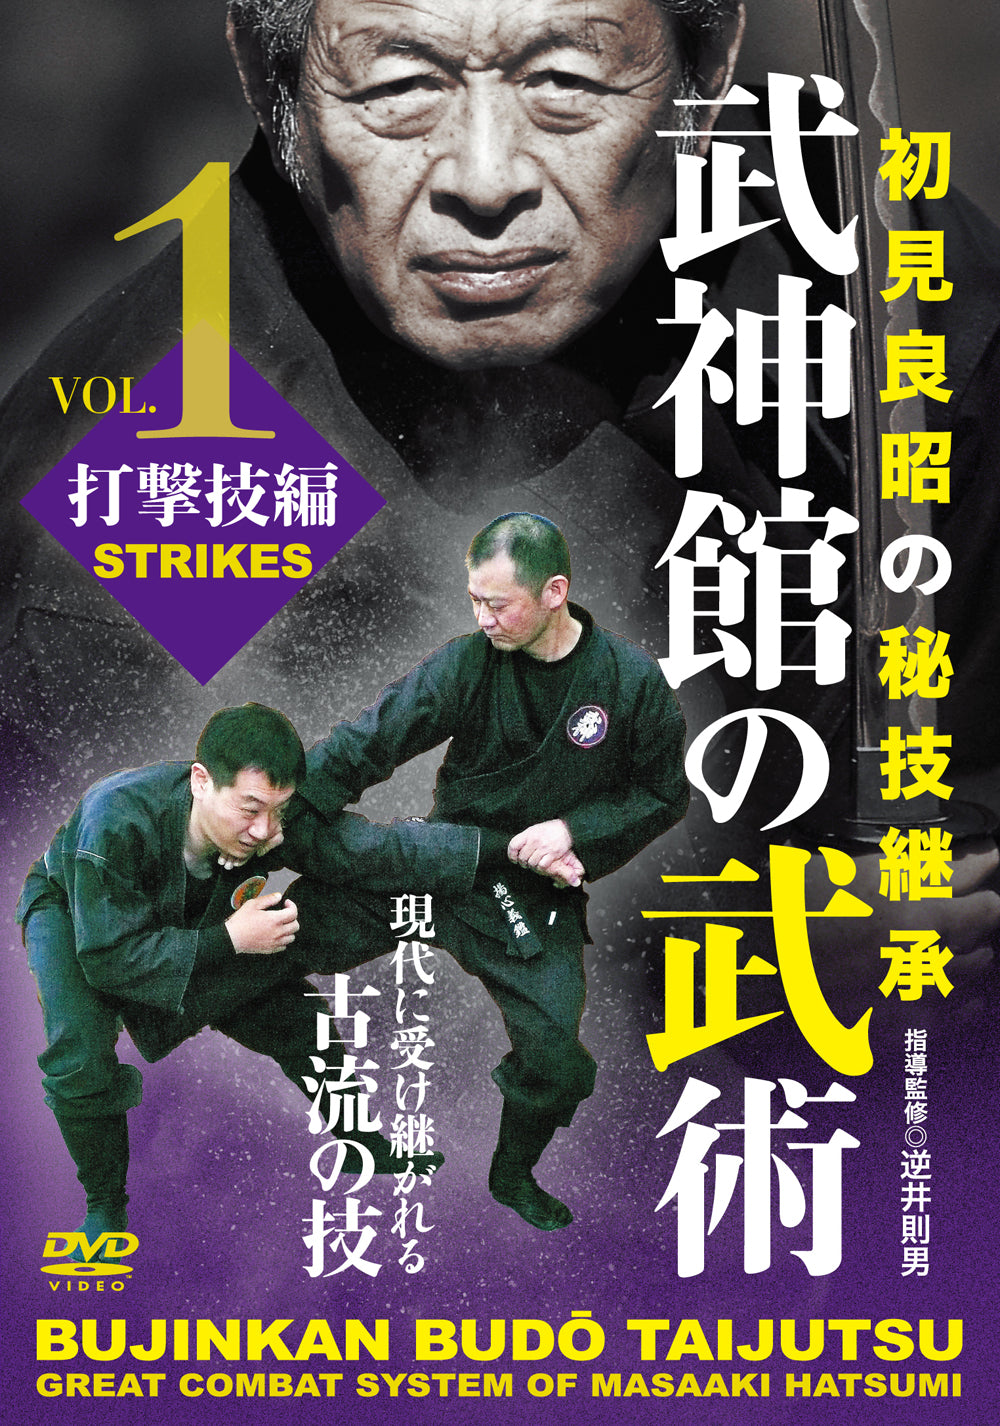 Bujinkan Budo Taijutsu: Great Combat System of Masaaki Hatsumi DVD 1 by Norio Sakasai